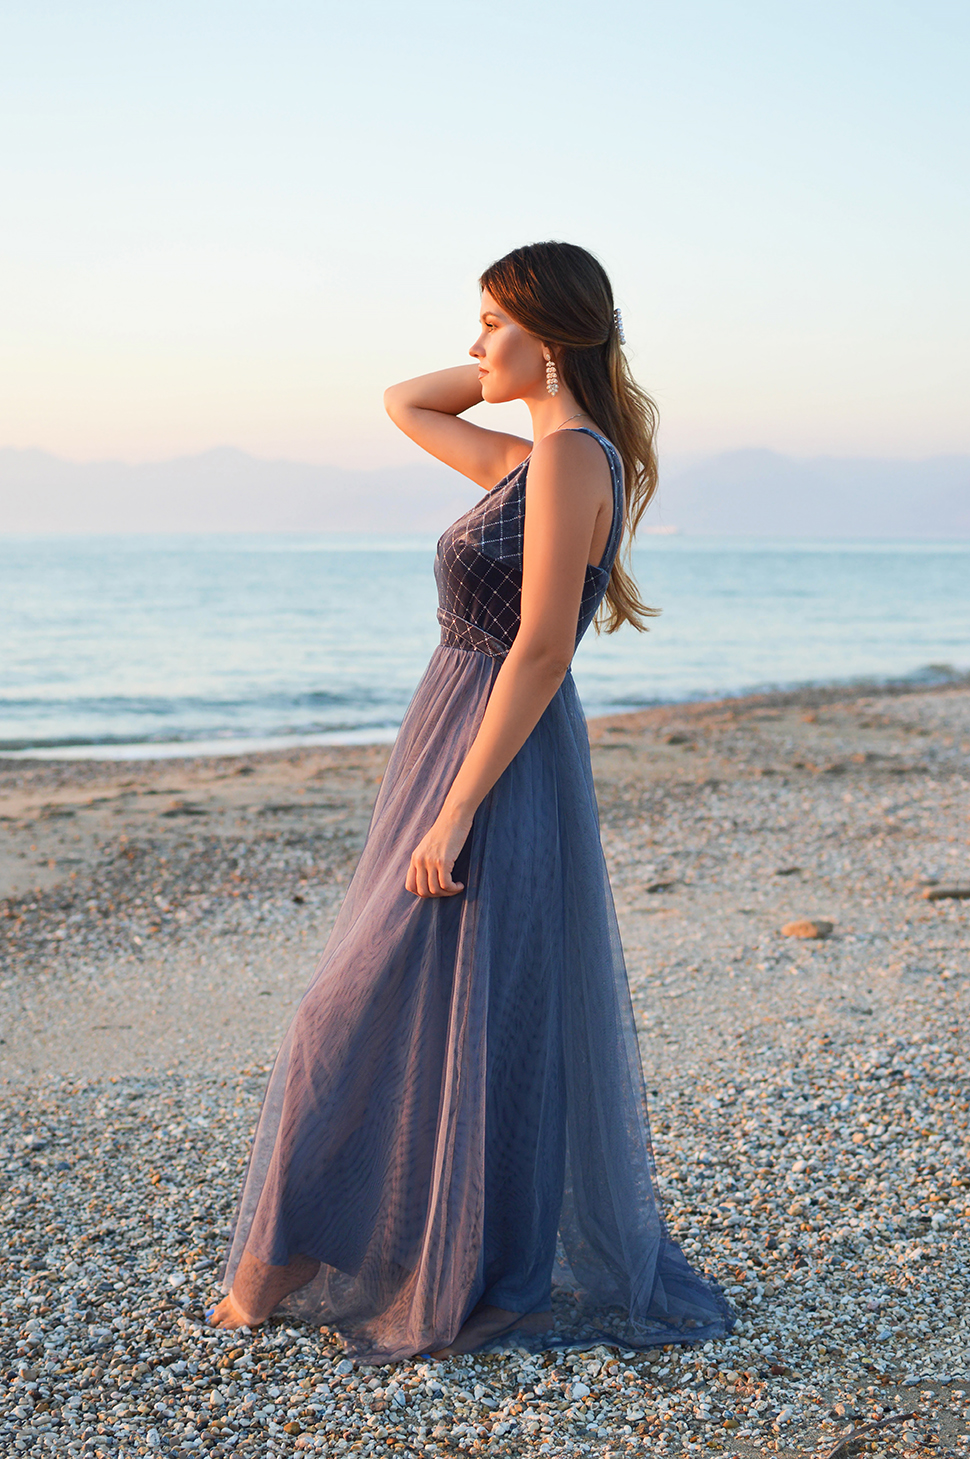 The Prettiest Cinderella Dress by Tamara Bellis